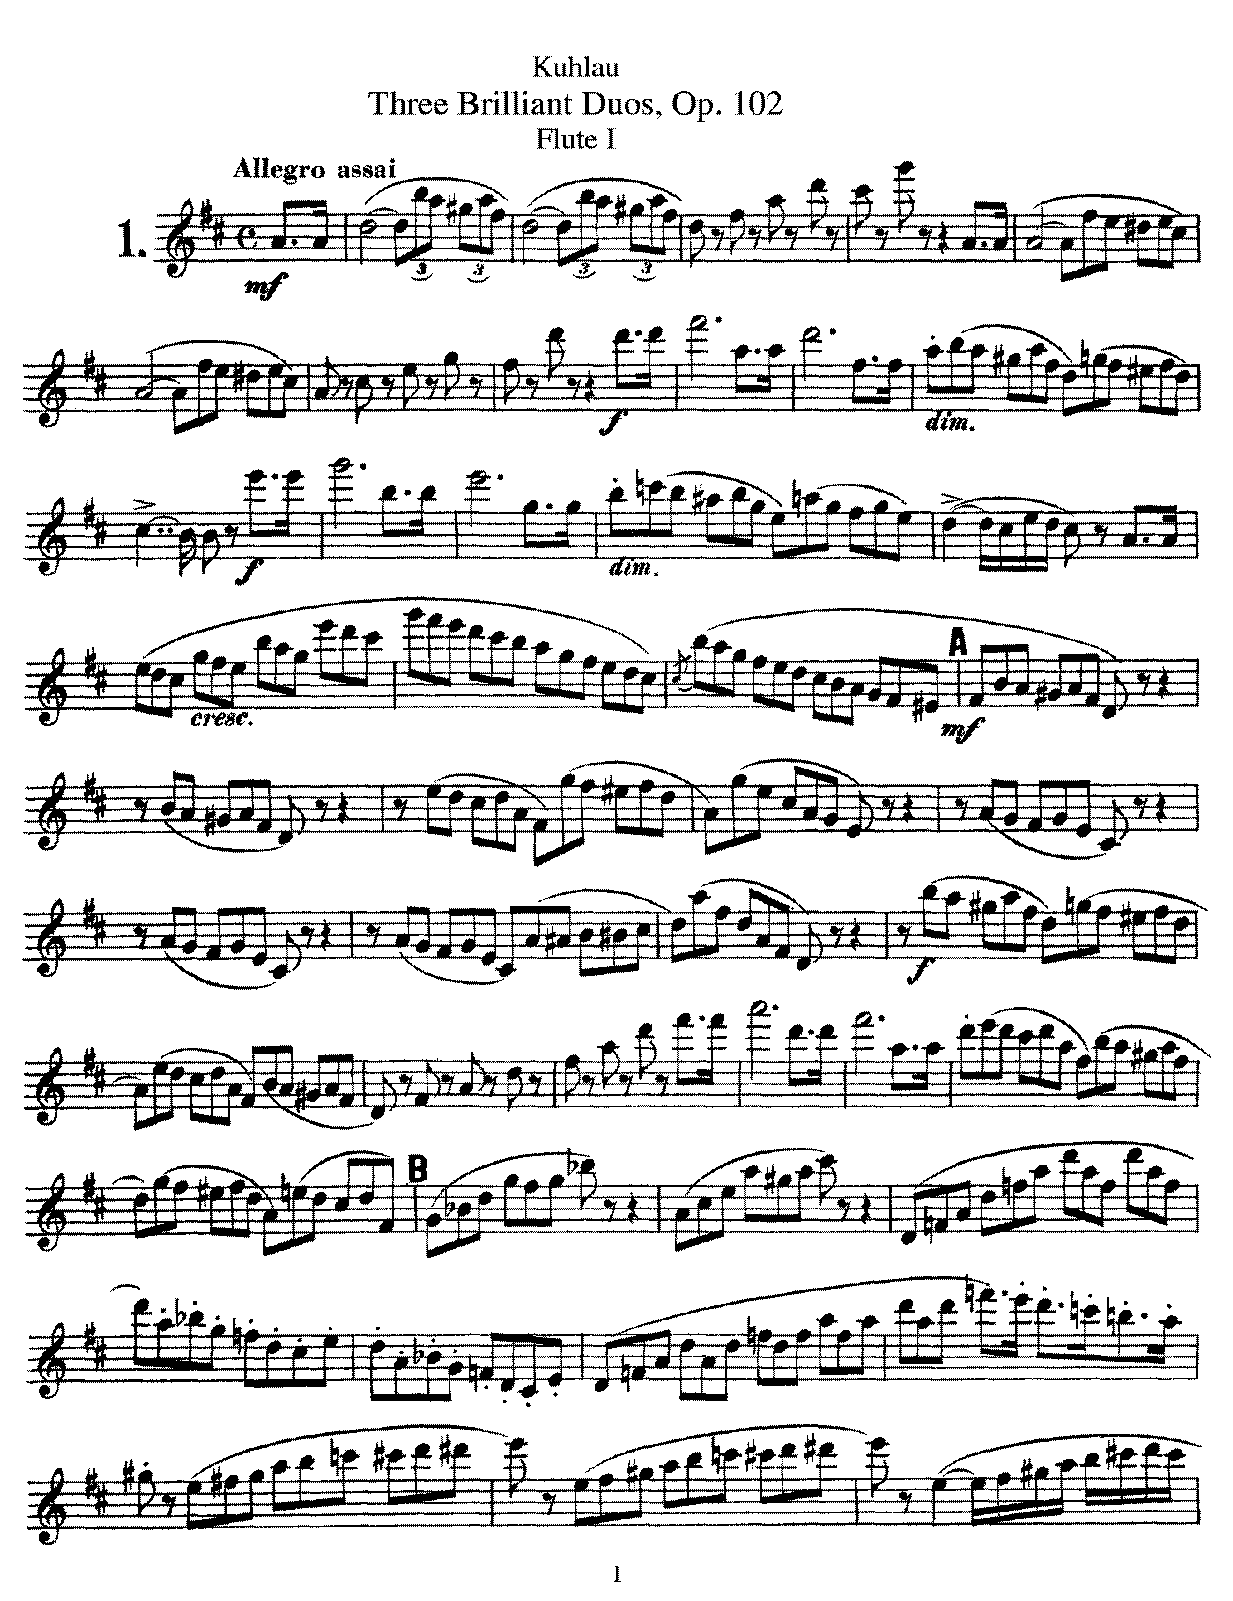 3-brilliant-duos-for-2-flutes-op-102-kuhlau-friedrich-imslp